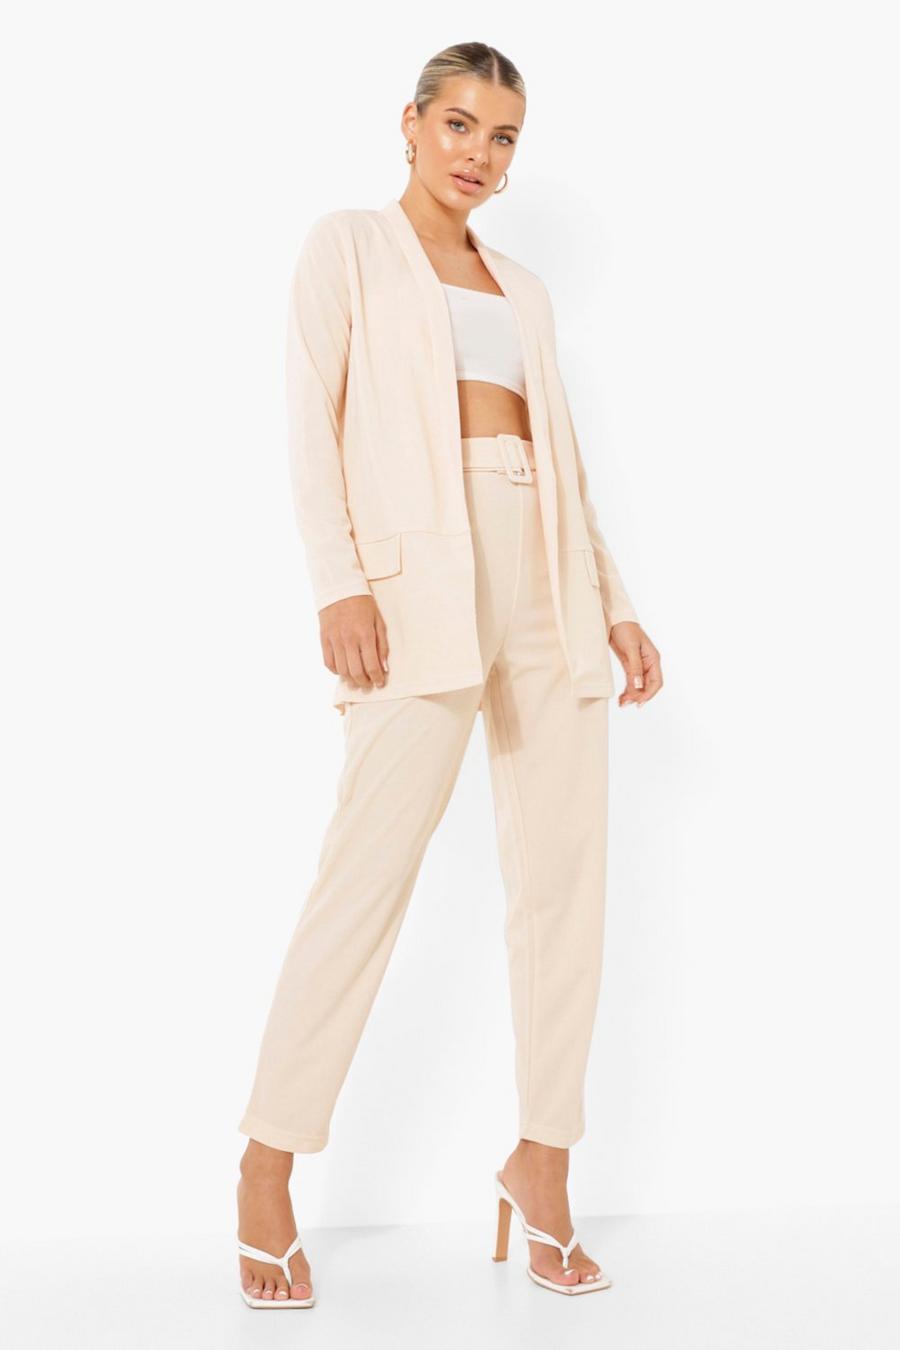 Blush rose Blazer & Self Fabric Trouser Suit Set